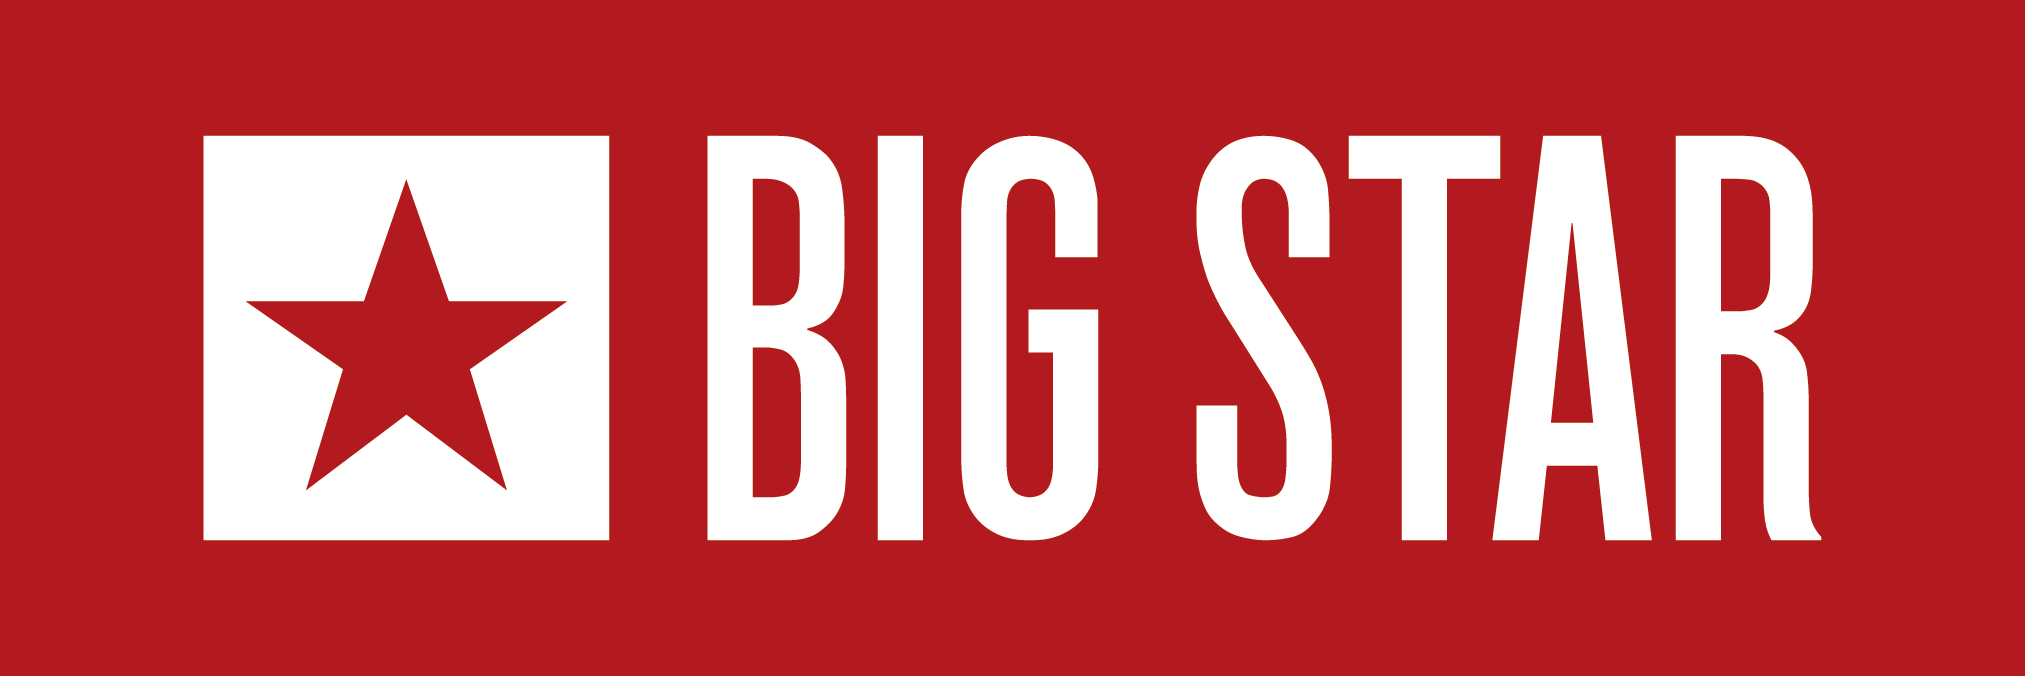 bigstar_logo_poziom